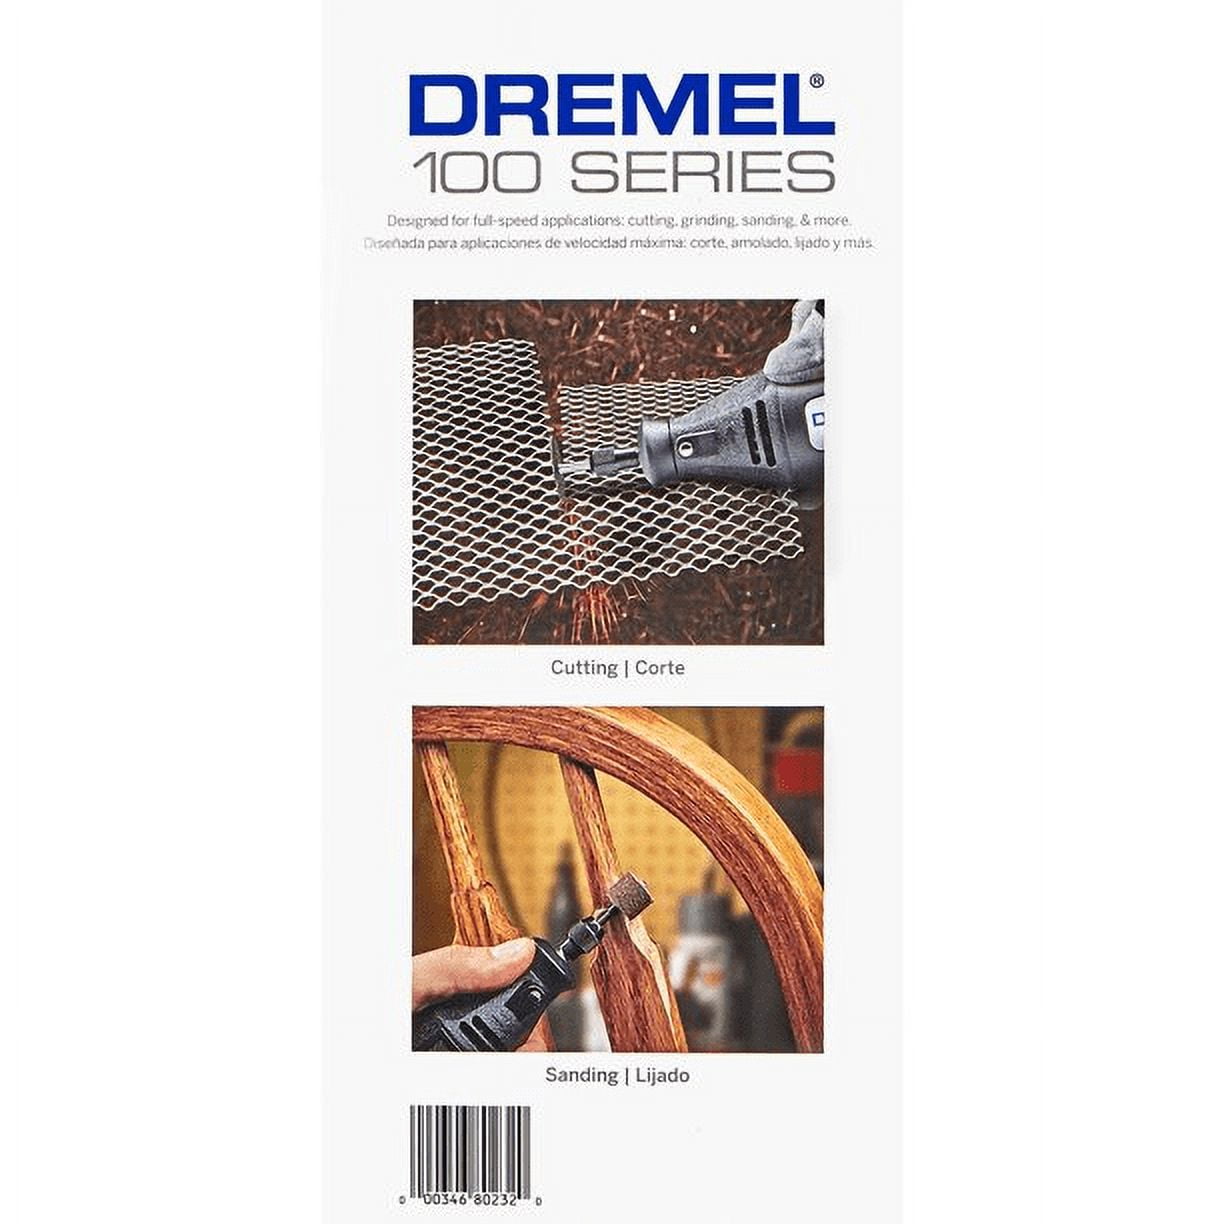 Dremel 100 Series Single Speed Rotary Tool Kit - 120 V